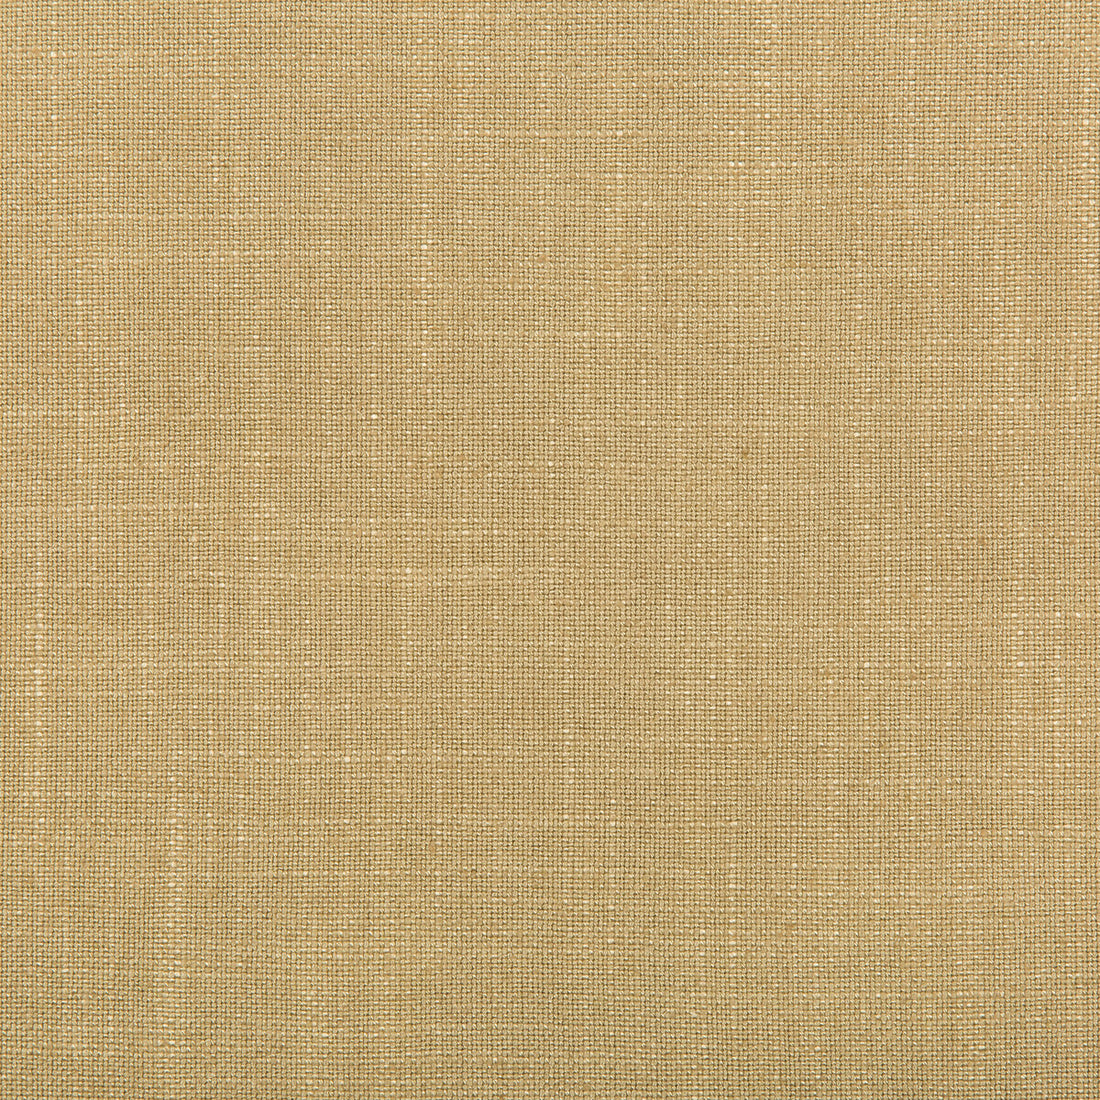 Aura fabric in barley color - pattern 35520.404.0 - by Kravet Design